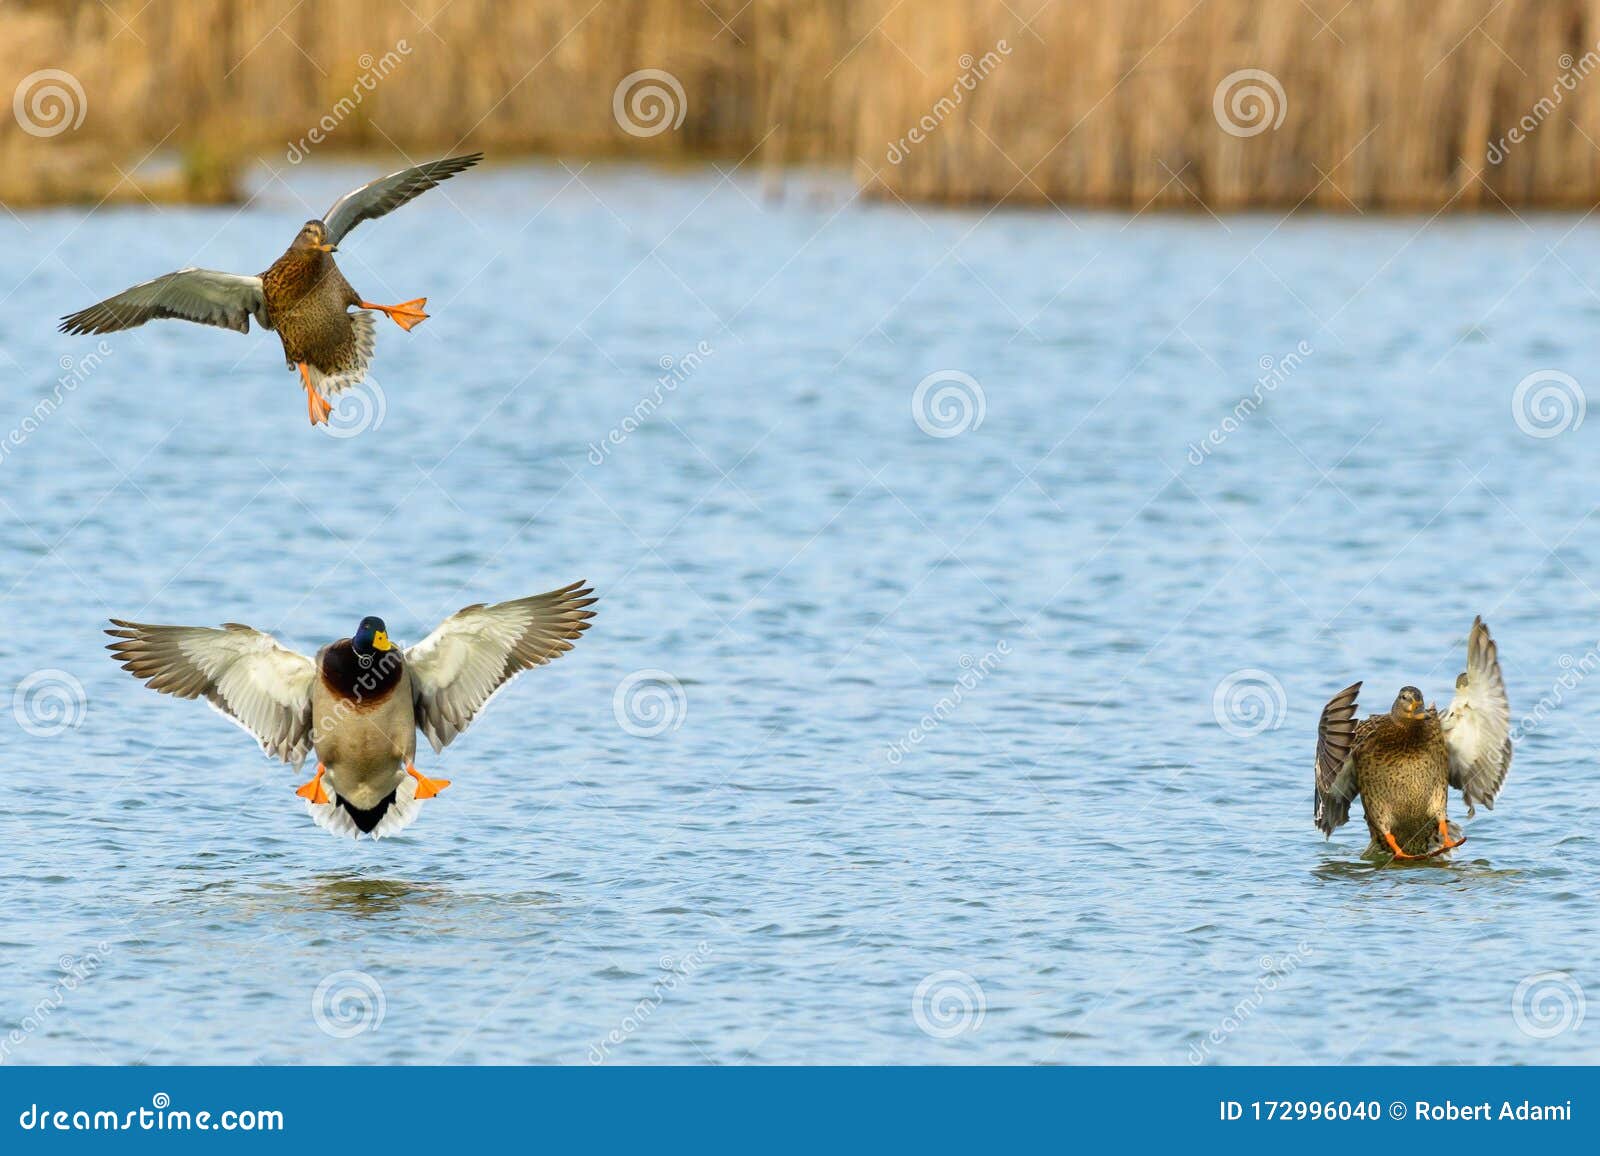 Mallard Ducks In Flight Landing Stock Photo Image Of Fast Drake 172996040,Nasturtium Climbing